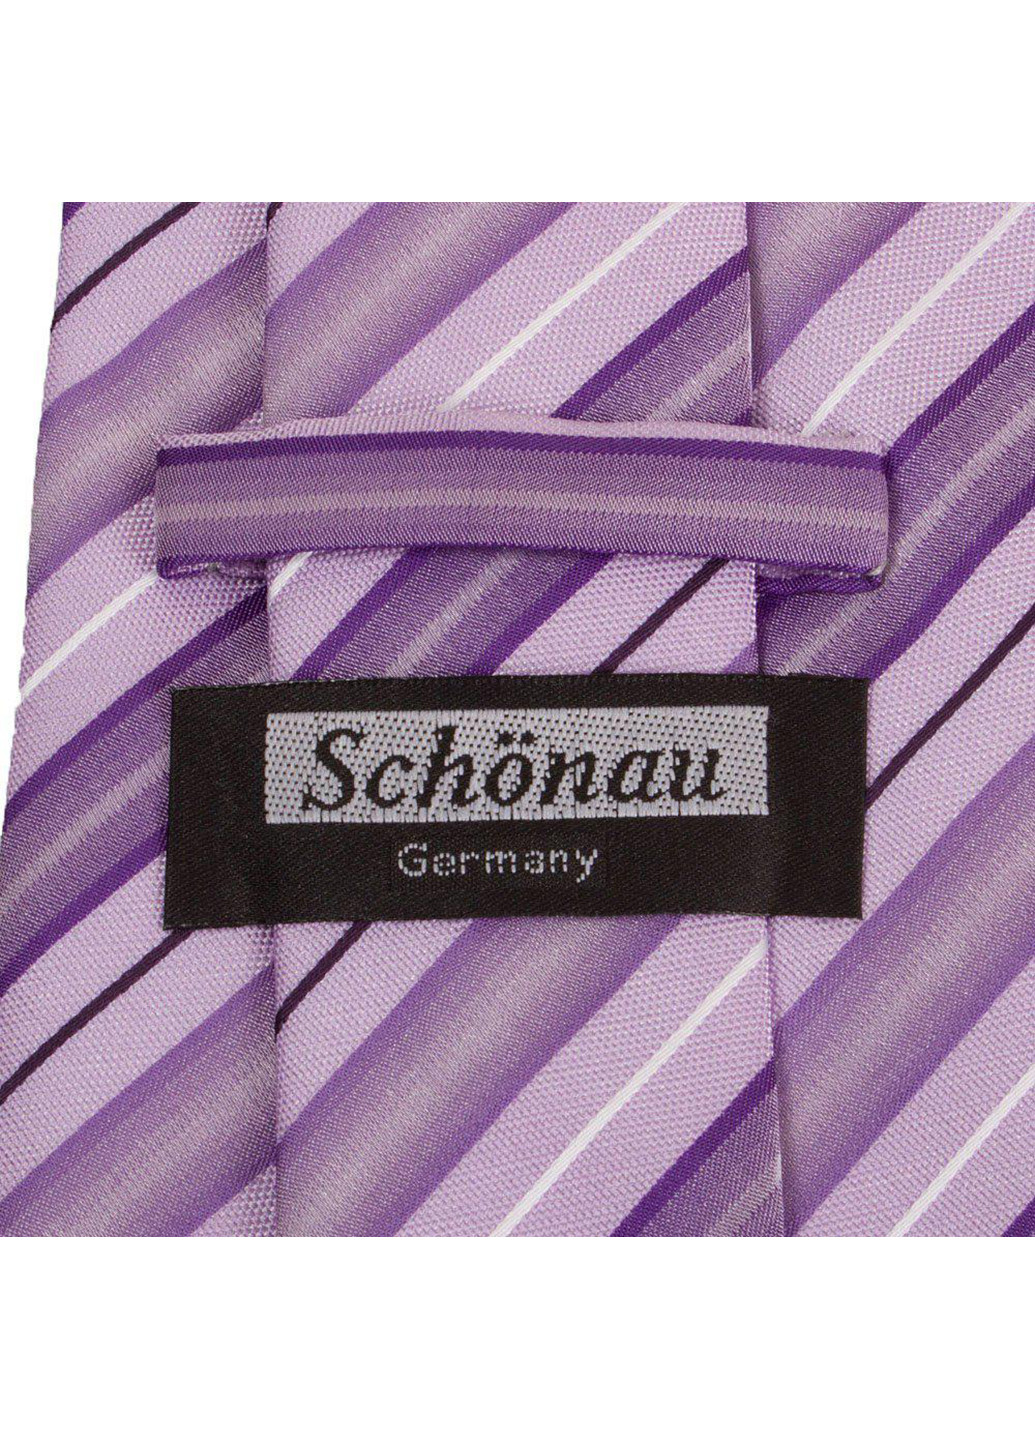 Мужской галстук 146,5 см Schonau & Houcken (252131940)